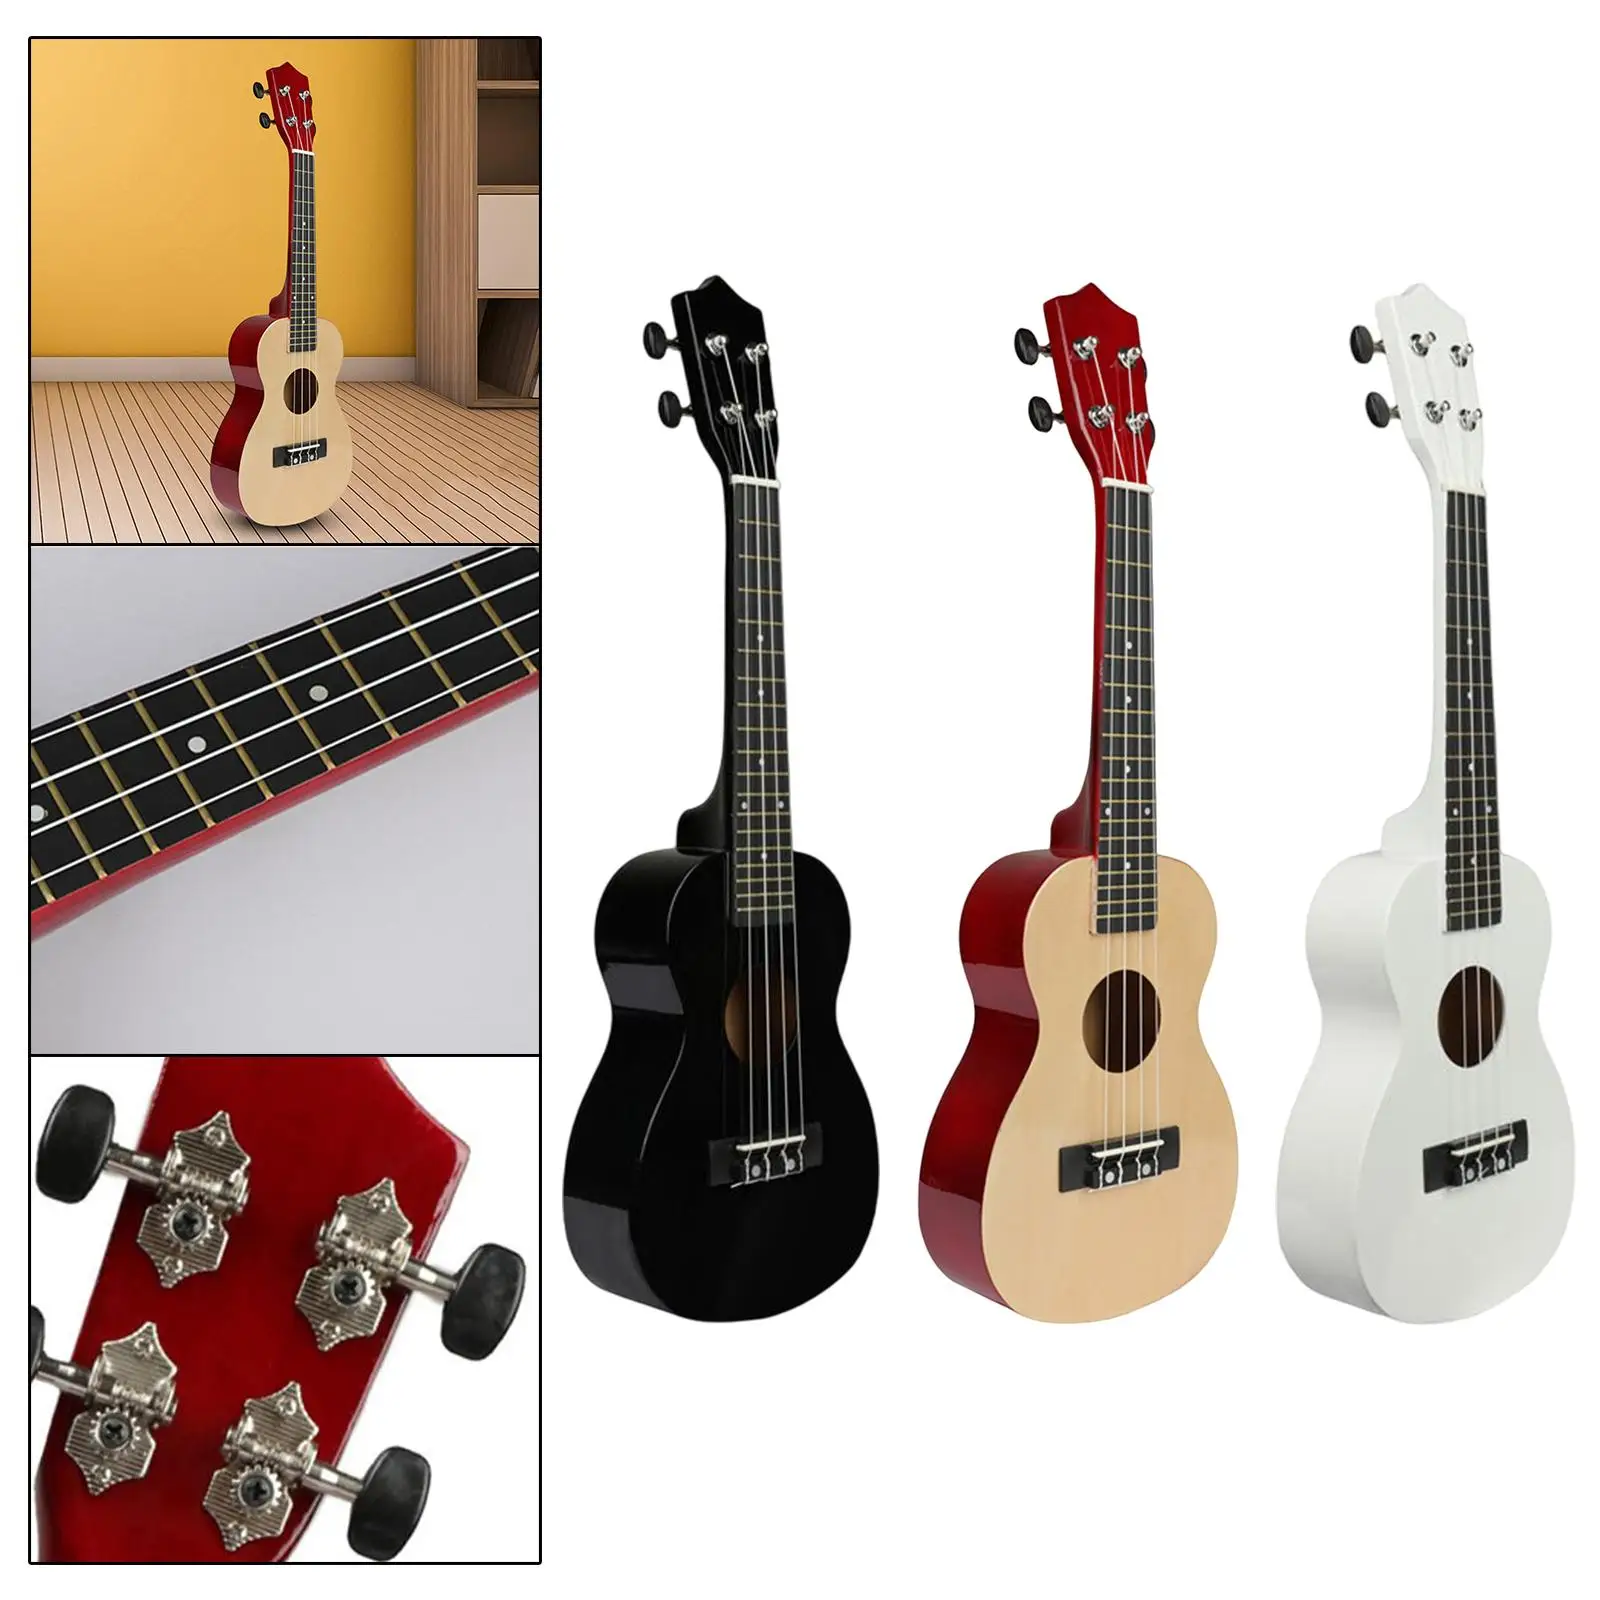 Professional Ukulele Guitar Toy Classical Developmental Skill Improving Musical Instrument for Children Beginner Birthday Gifts